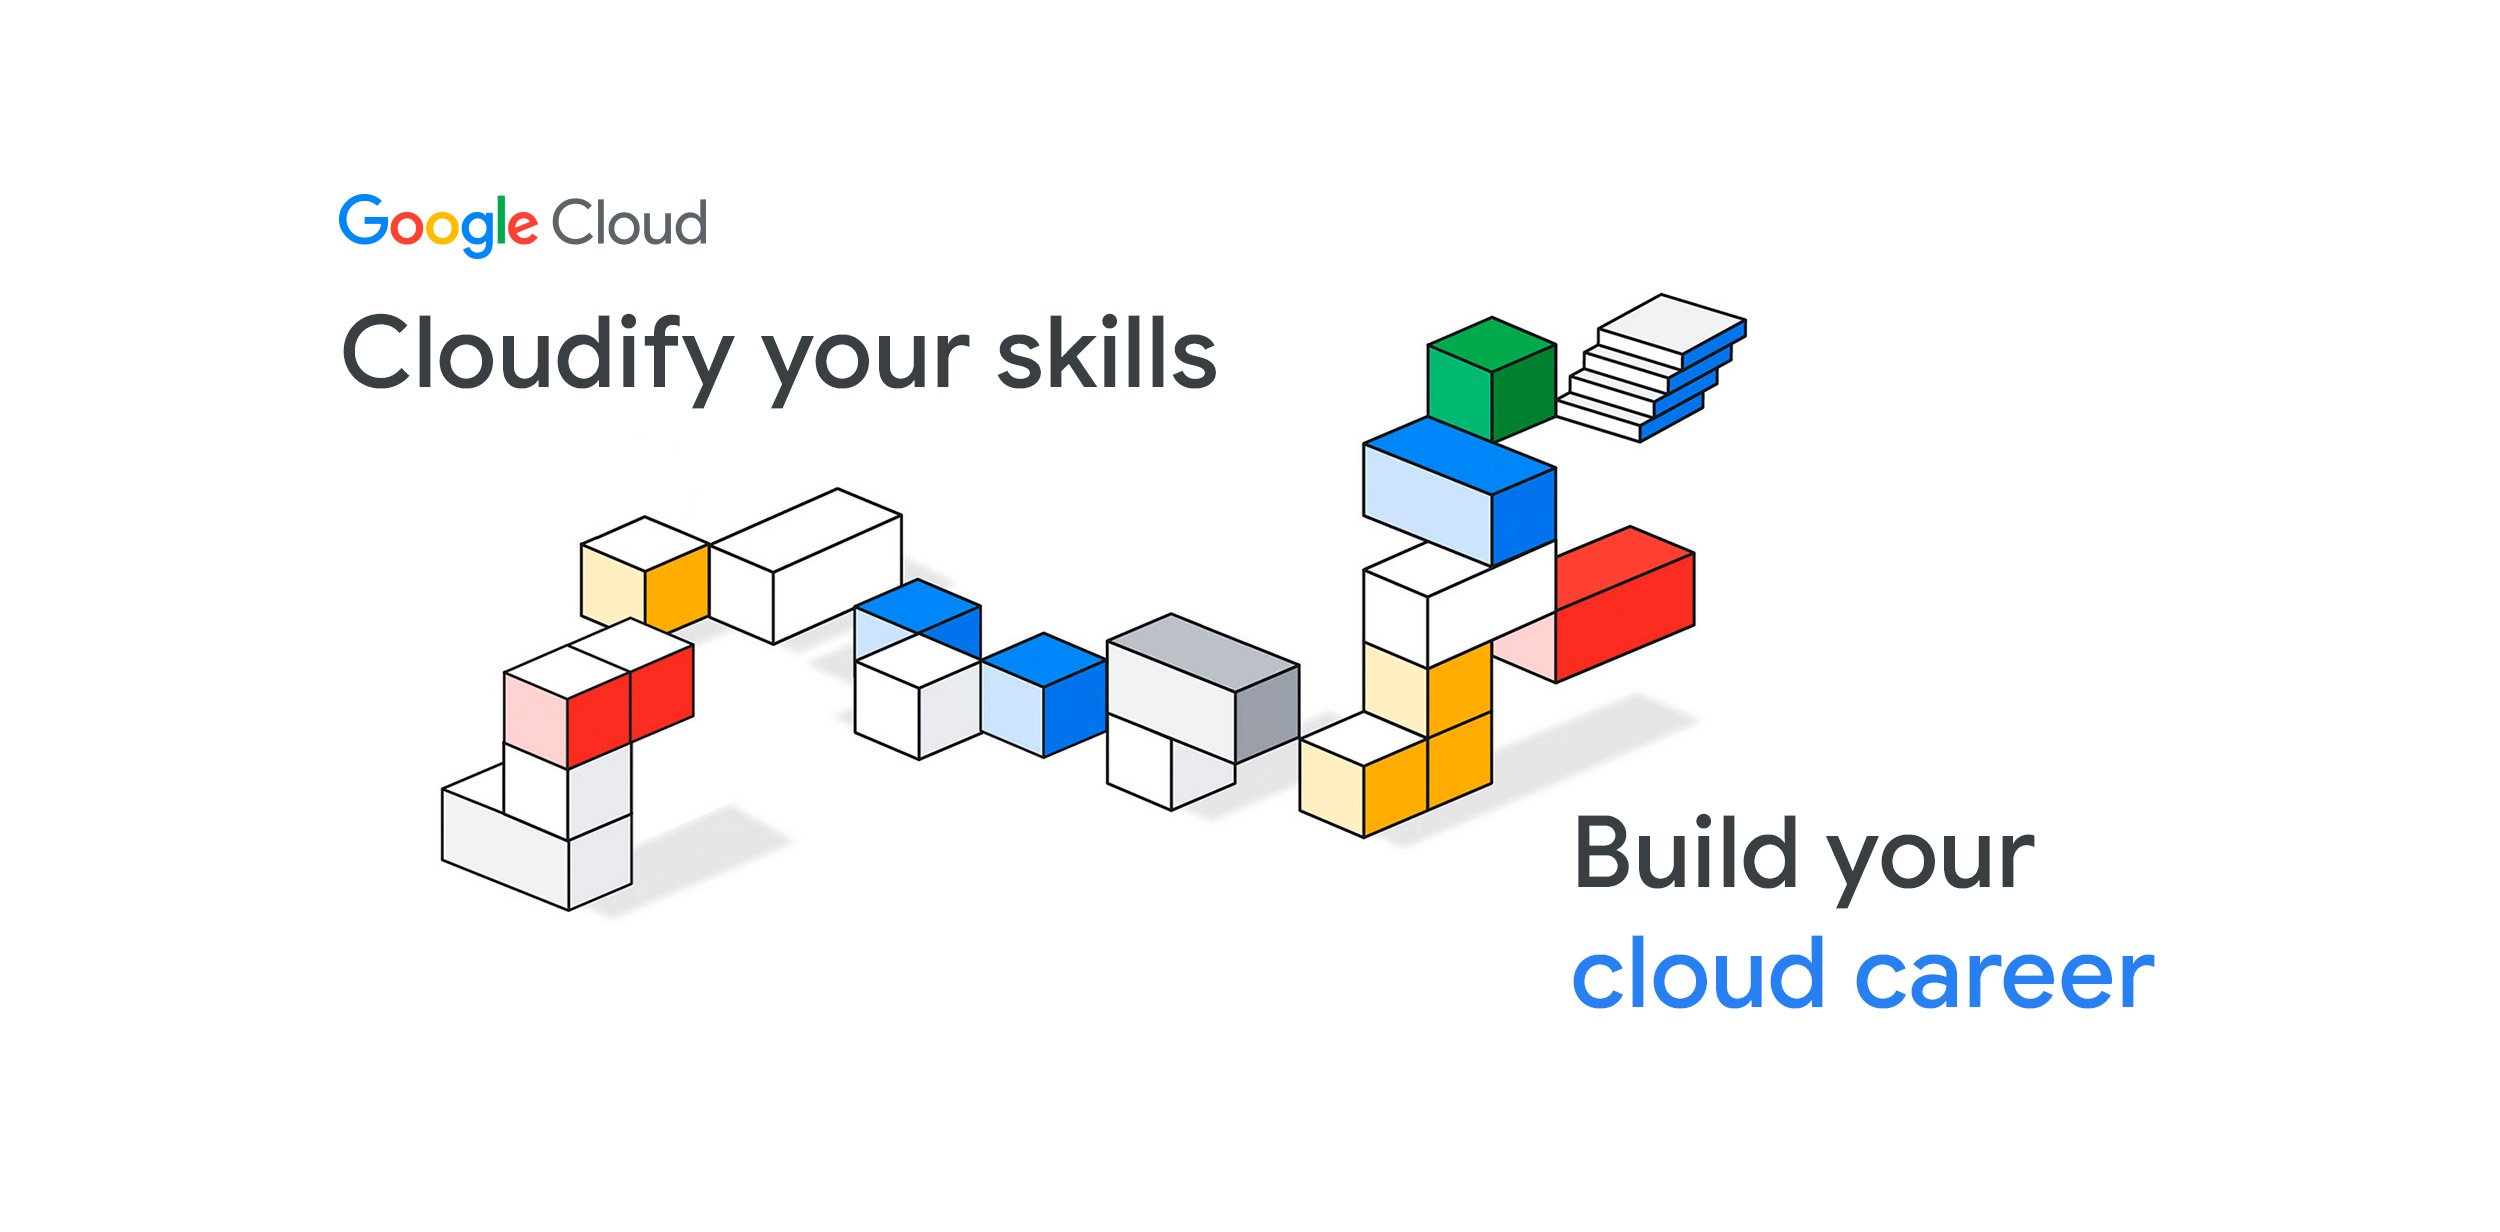 https://storage.googleapis.com/gweb-cloudblog-publish/images/cloudfy-skills-build_your_cloud_career.max-2500x2500.jpg